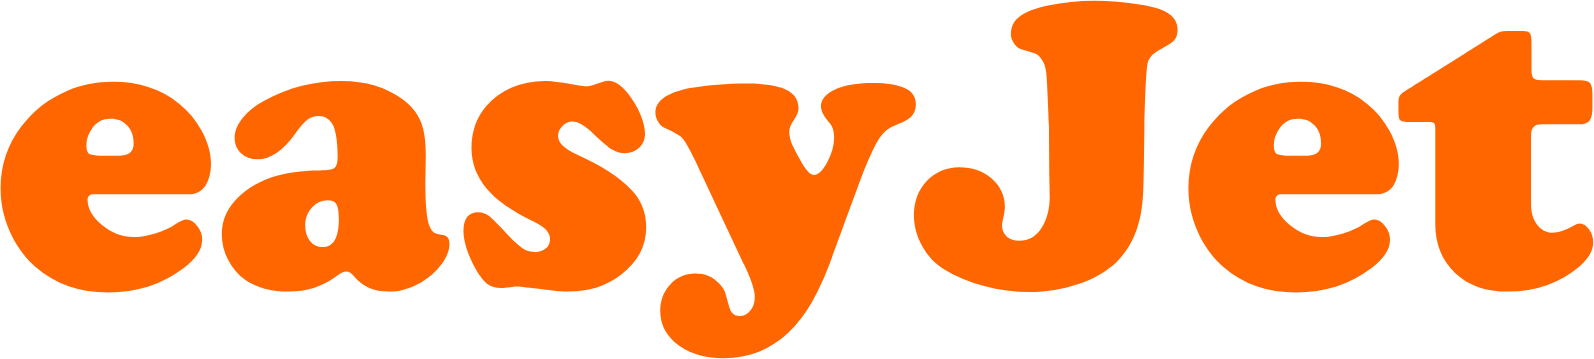 easyJet logo large (transparent PNG)